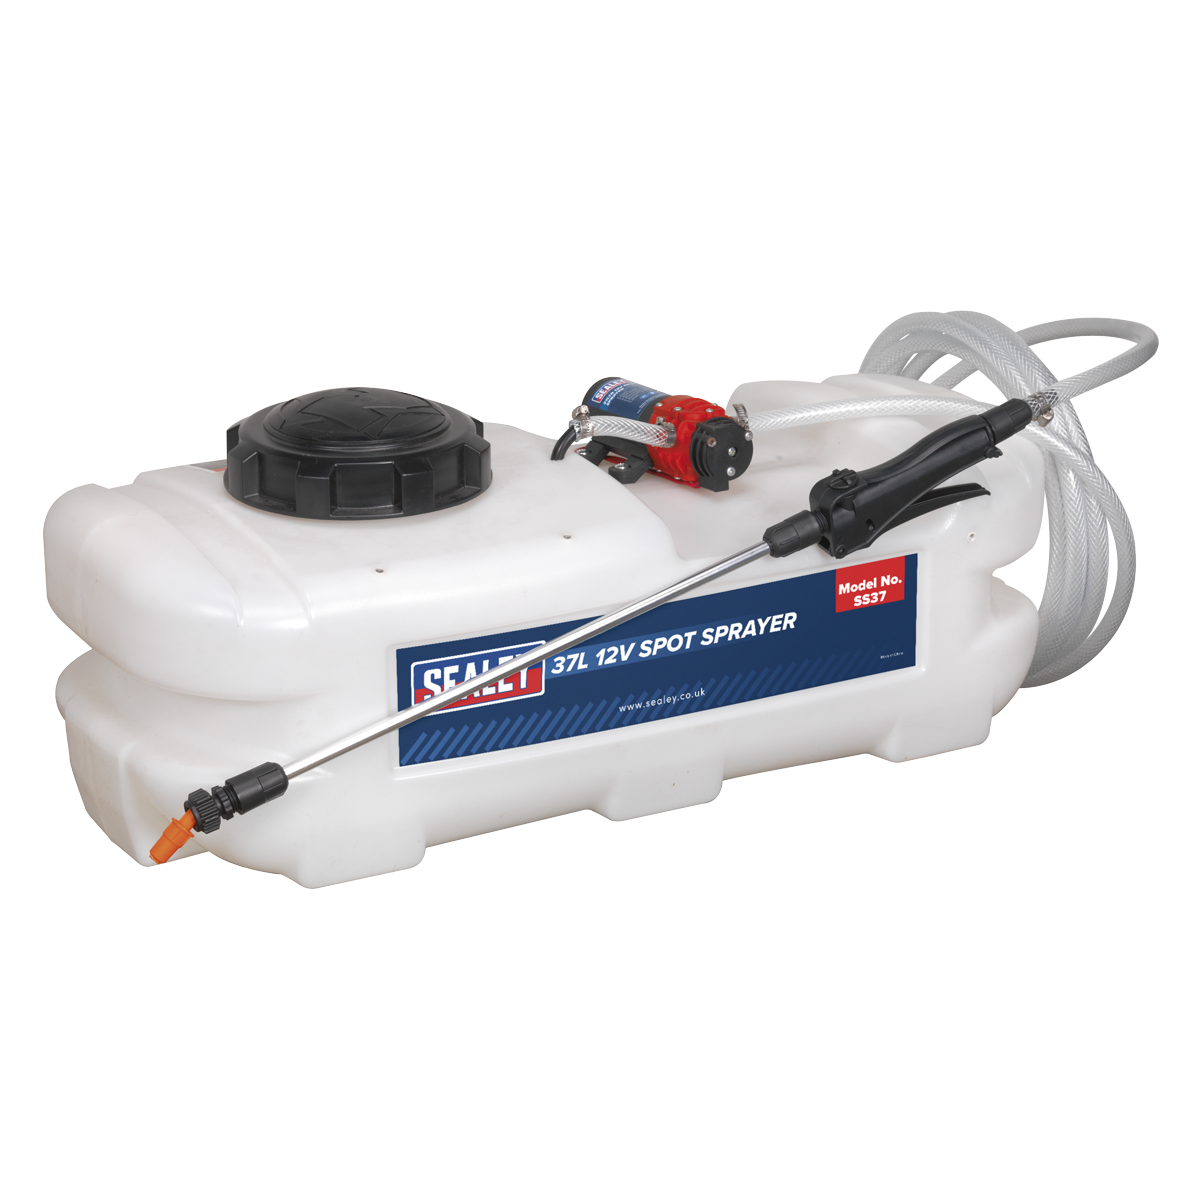 Sealey Spot Sprayer 37L 12V